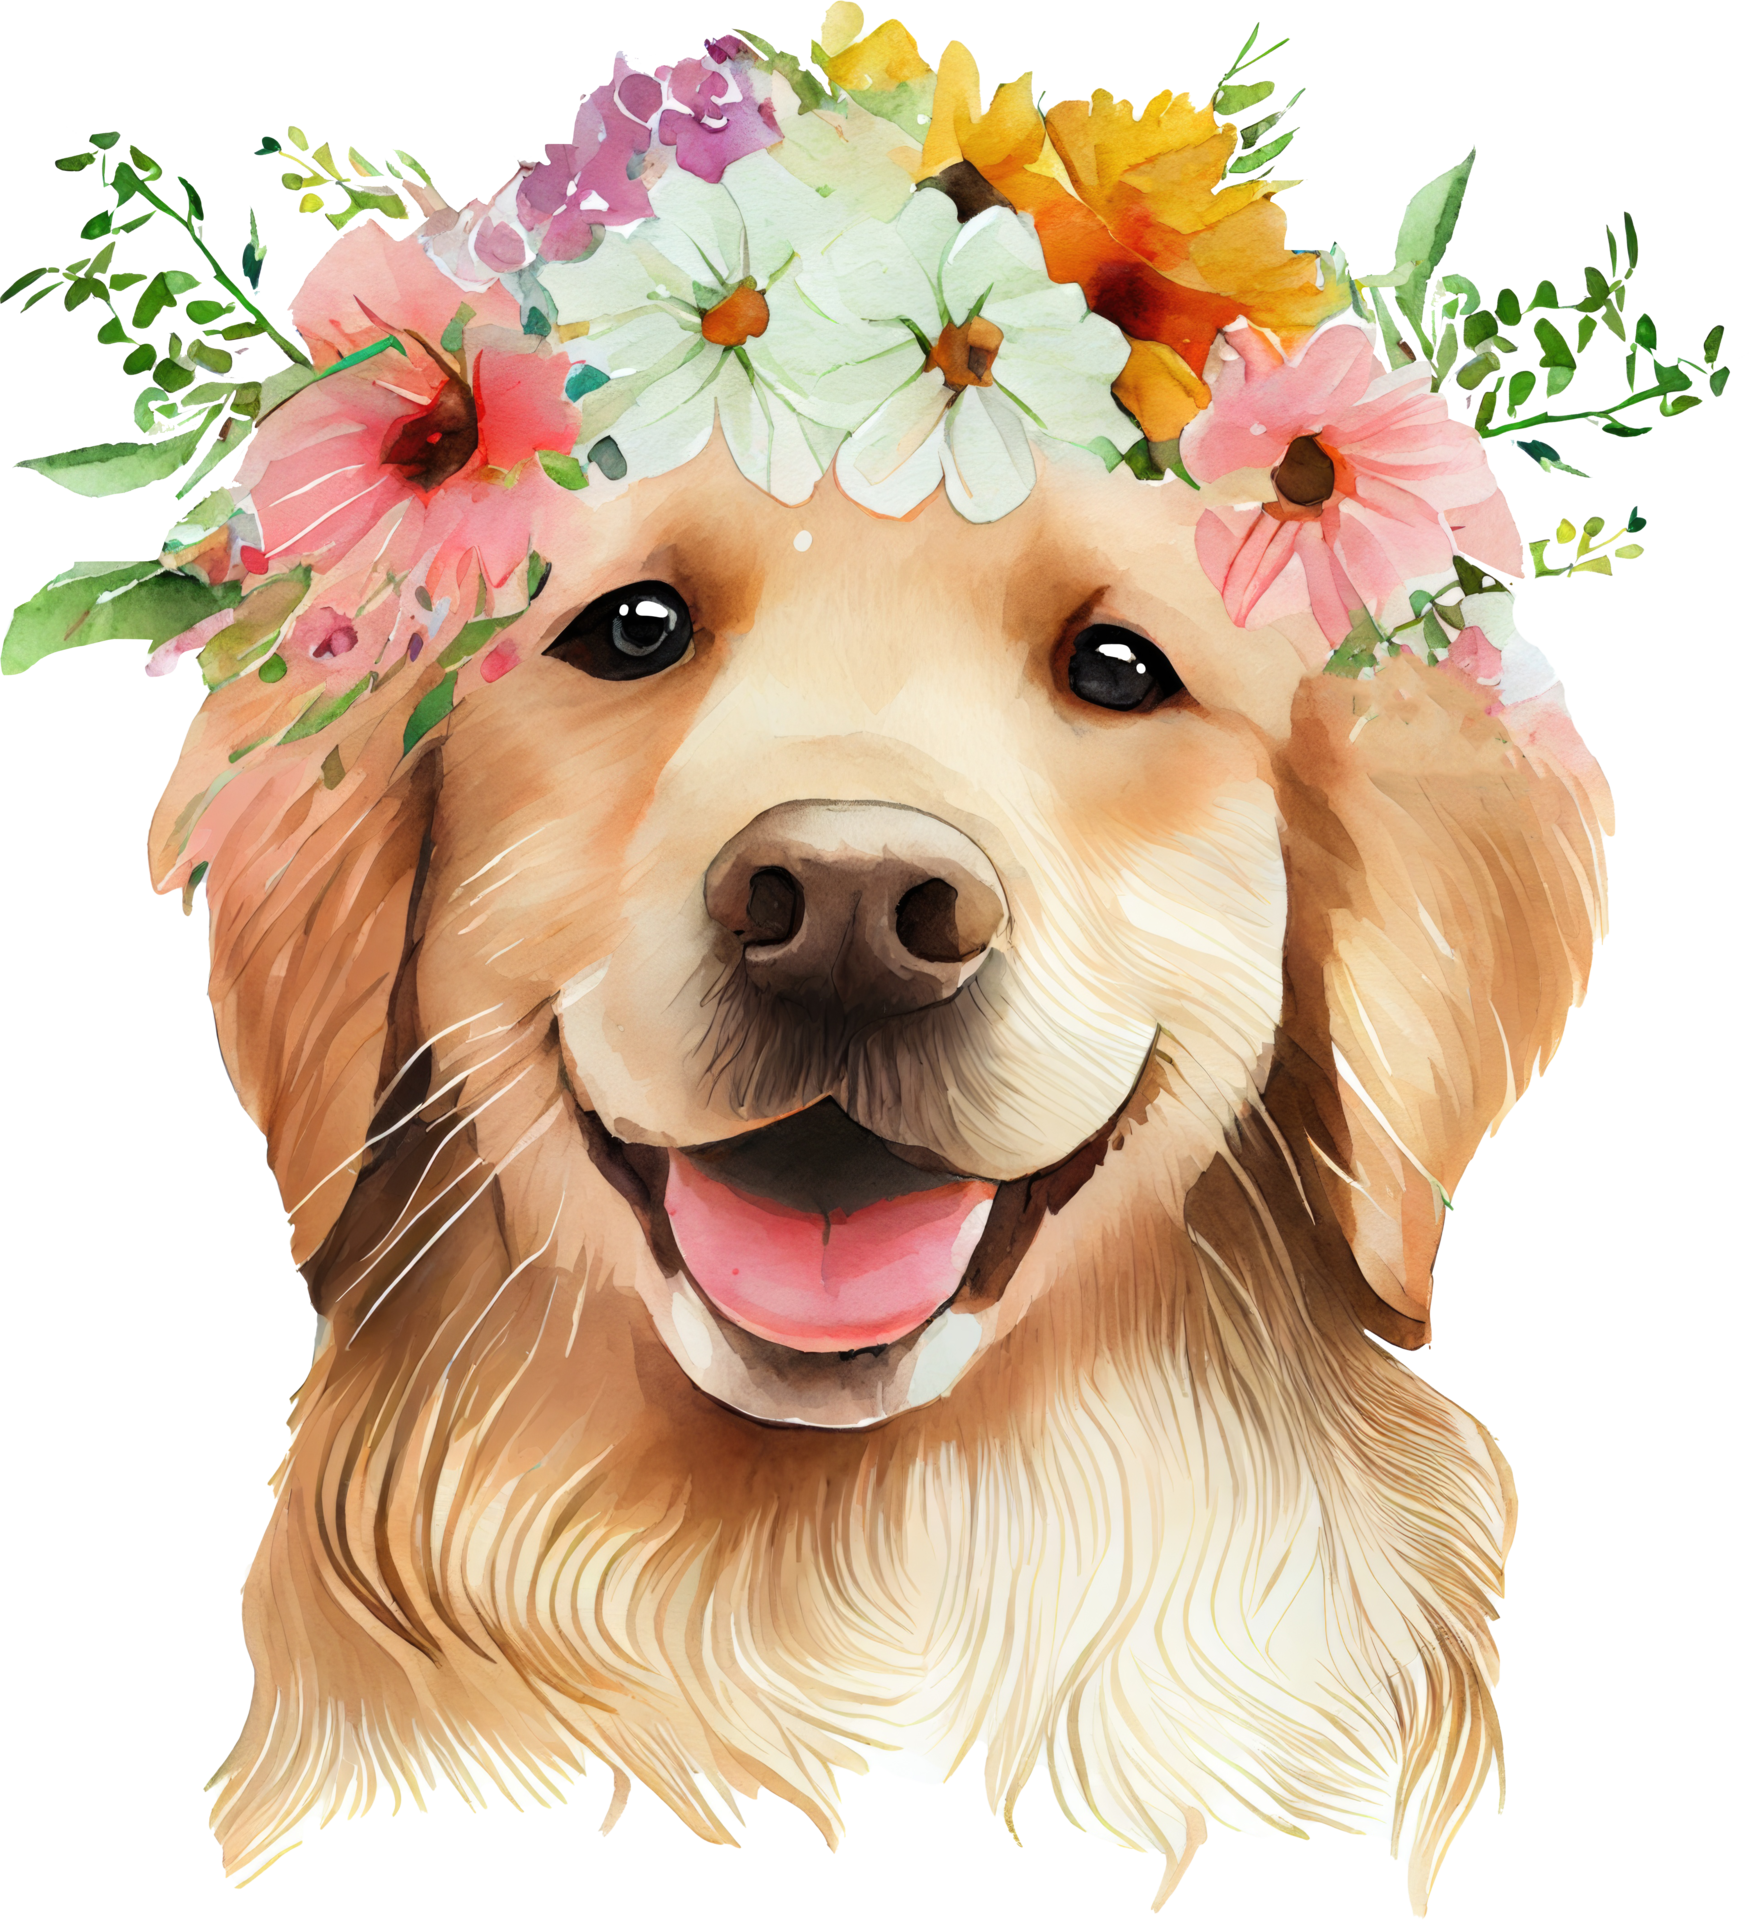 Cute Golden Retriever Dog Flowers Watercolor Illustration 21183336 PNG